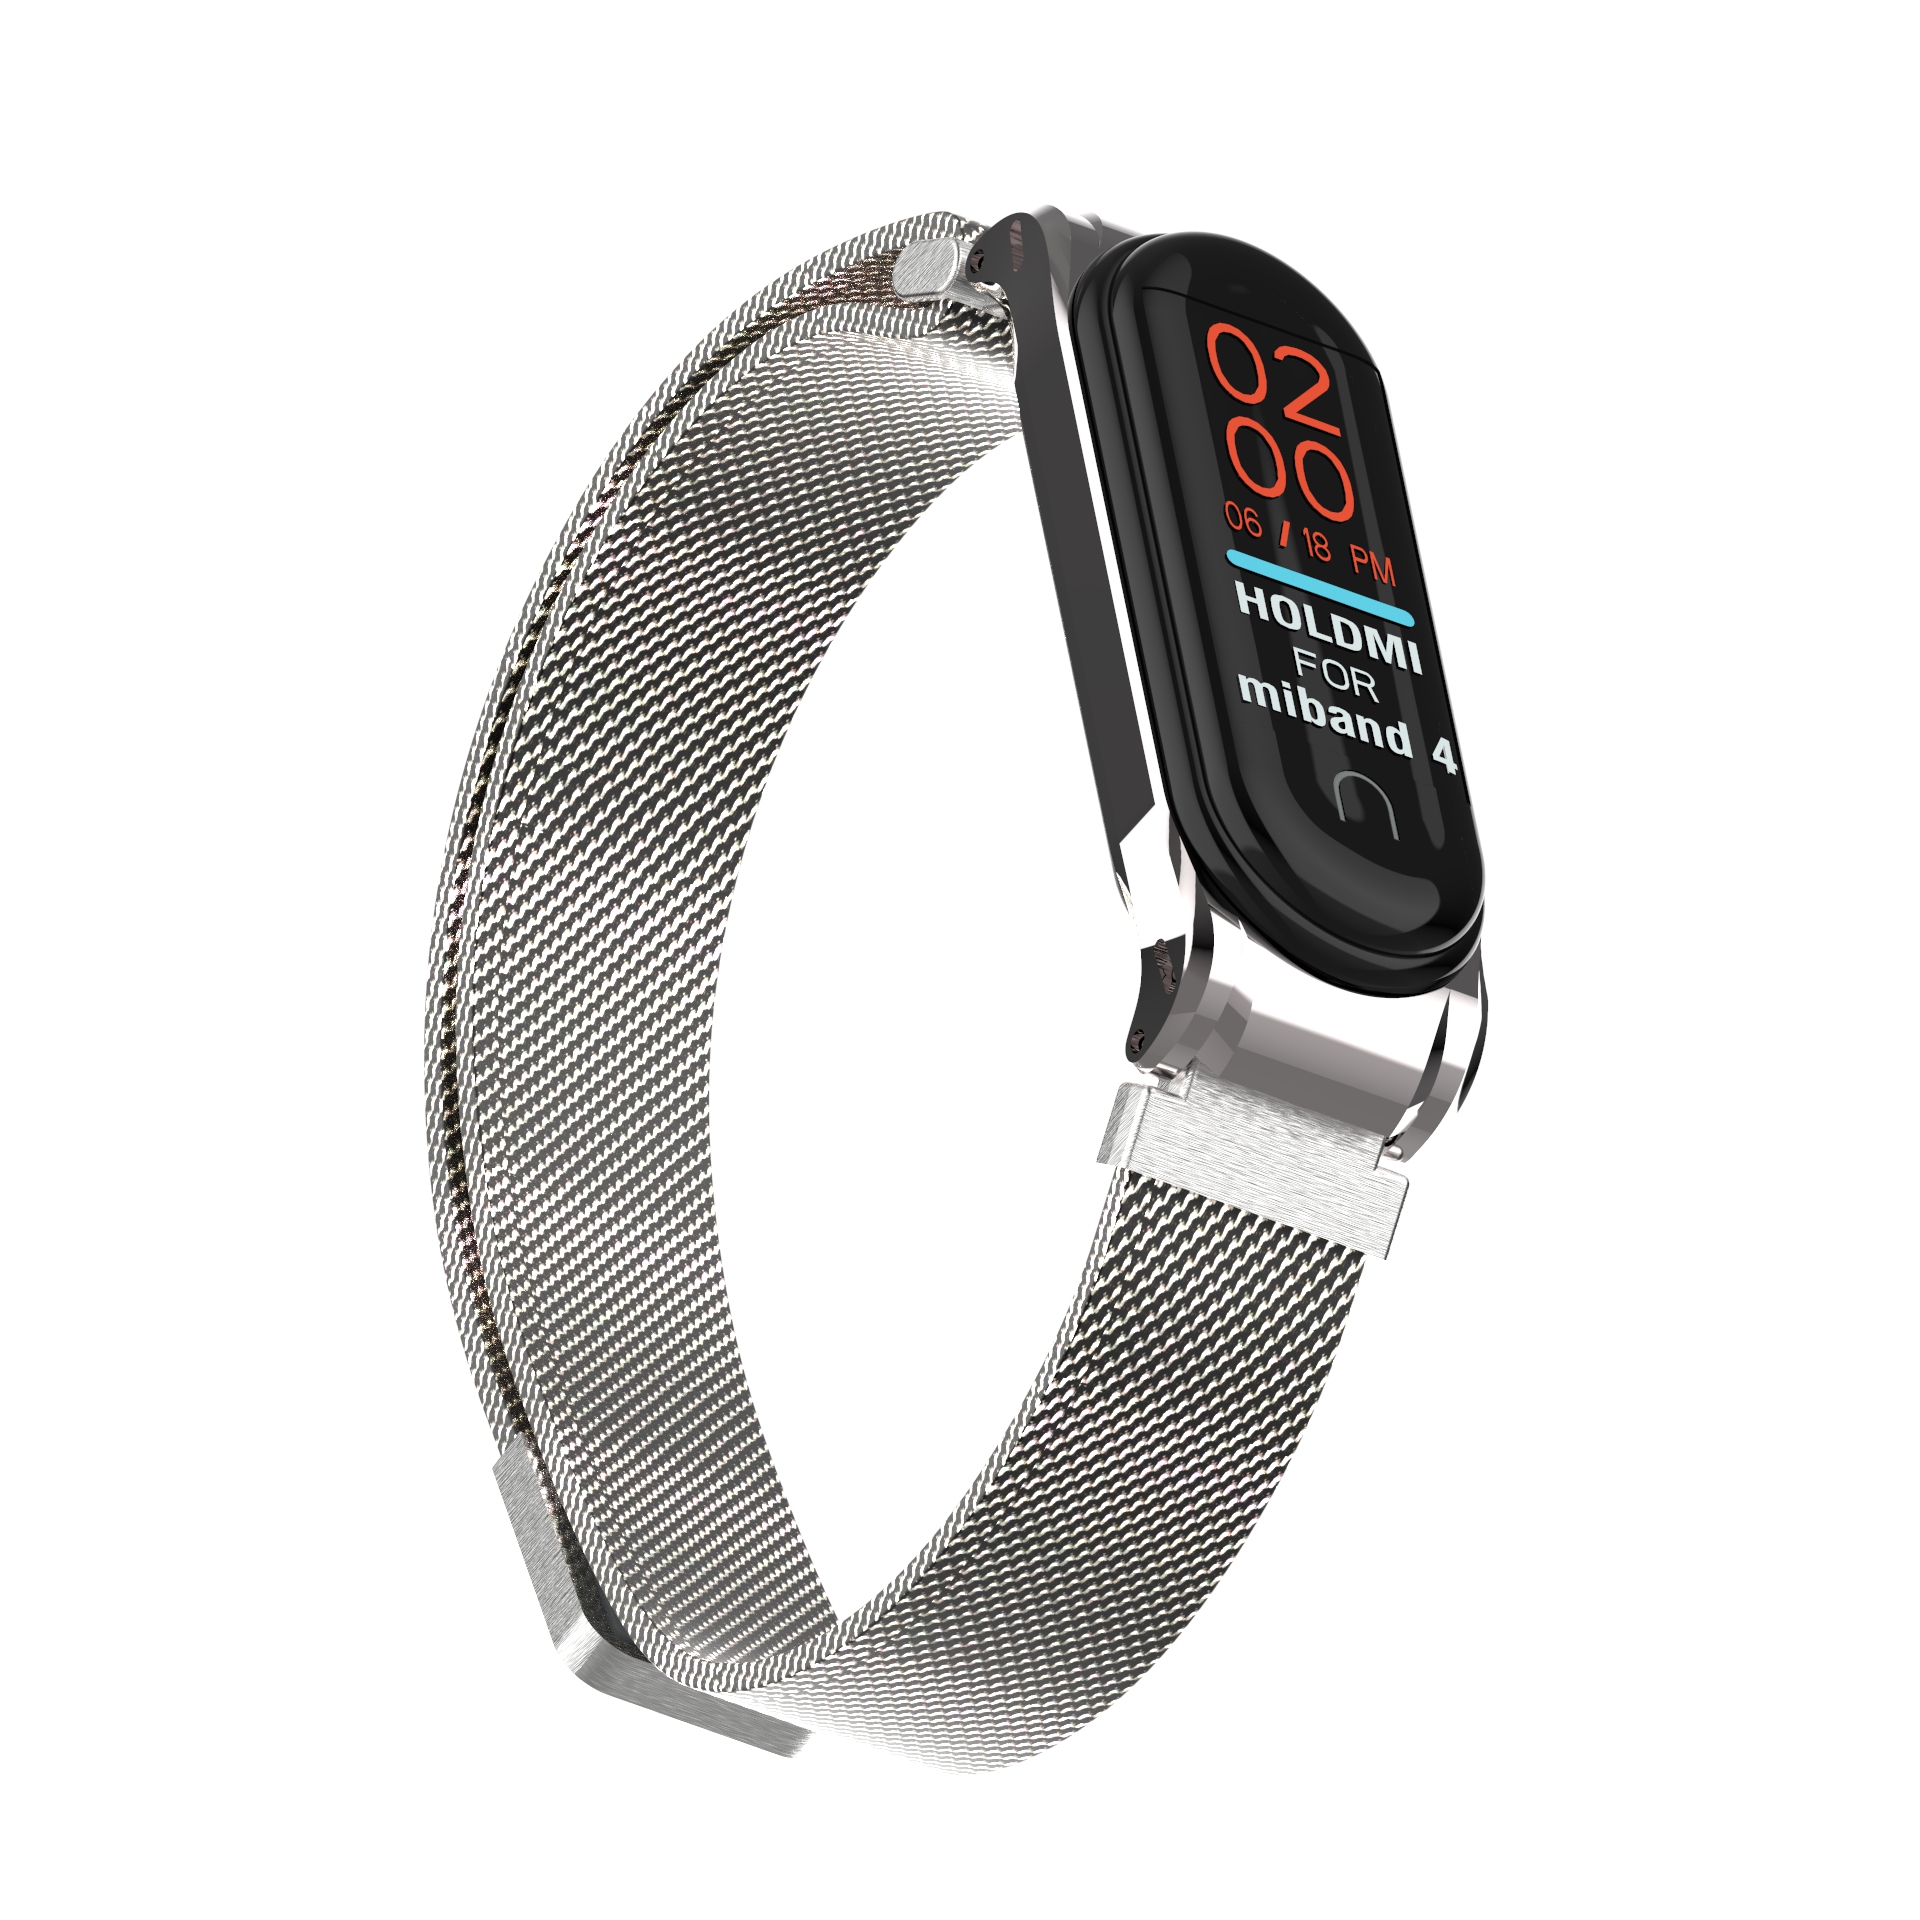 Bakeey-Milan-Stainless-Steel-Watch-Band-for-Xiaomi-mi-band-34-Smart-Watch-Non-original-1555793-7